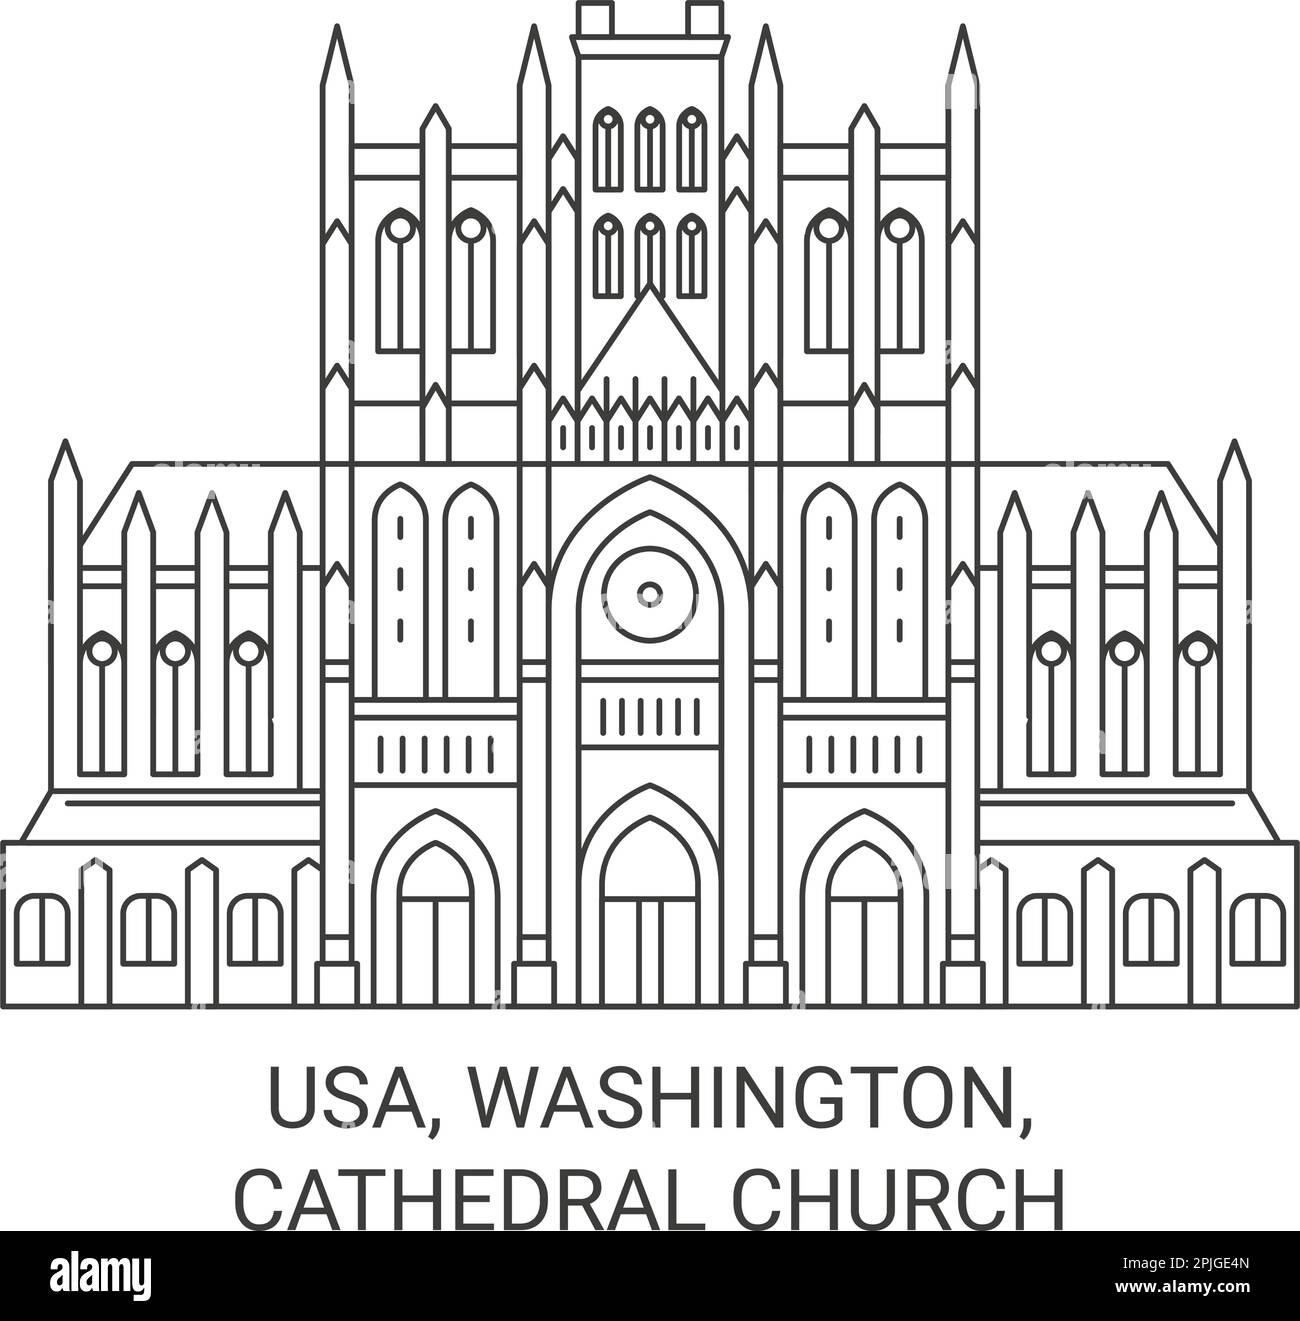 Usa, Washington, Cathedral Church travel landmark vector illustration Stock Vector